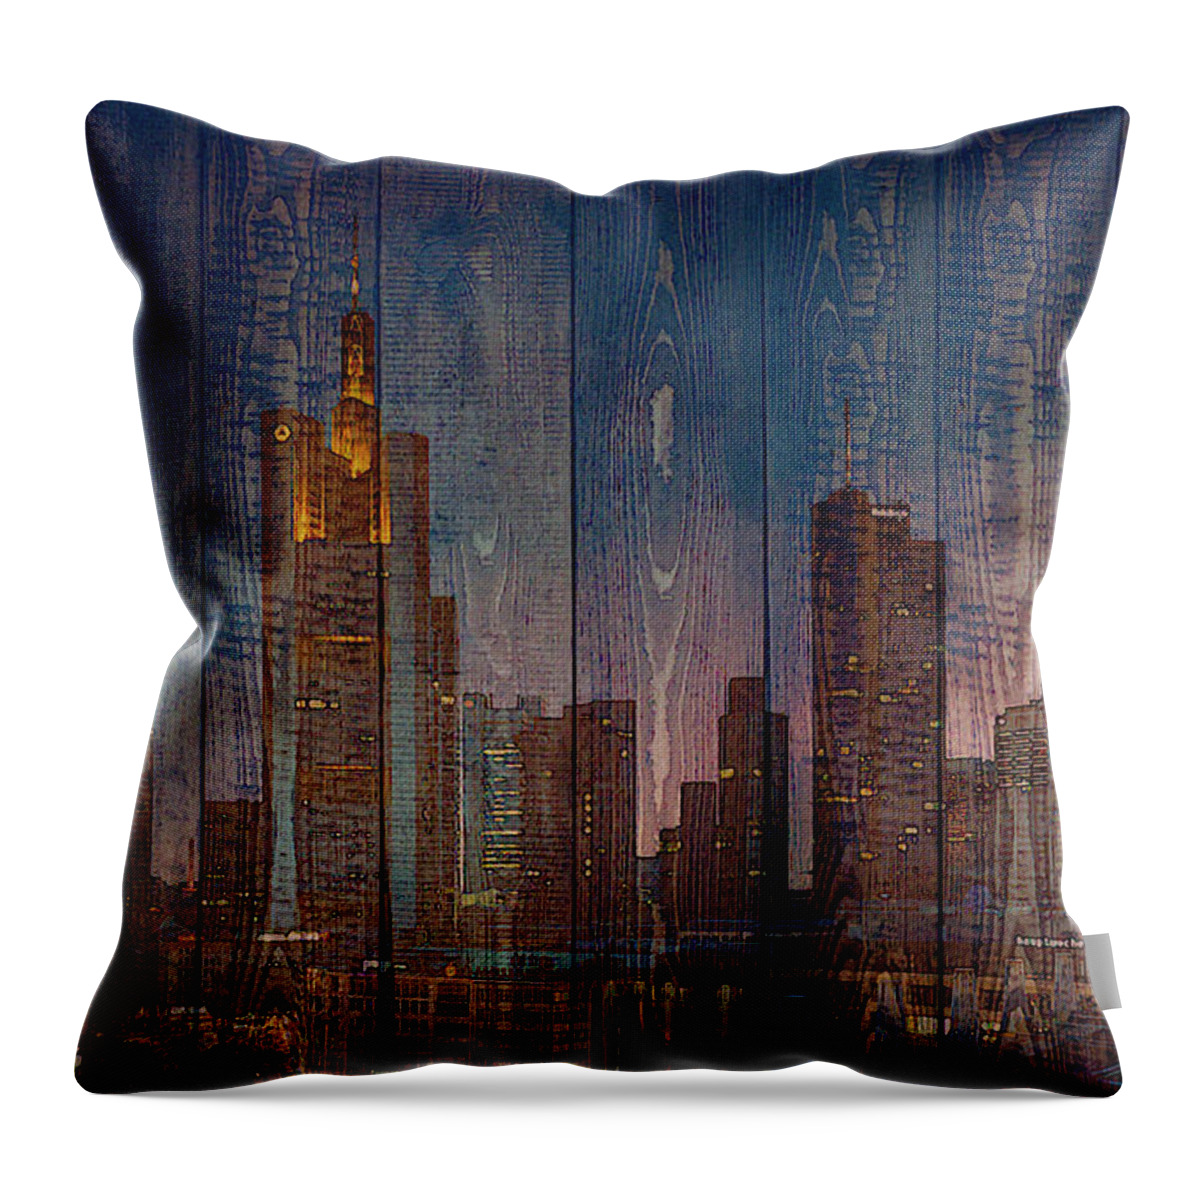 Frankfurt Throw Pillow featuring the mixed media Skyline of Frankfurt, Germany on Wood by Alex Mir